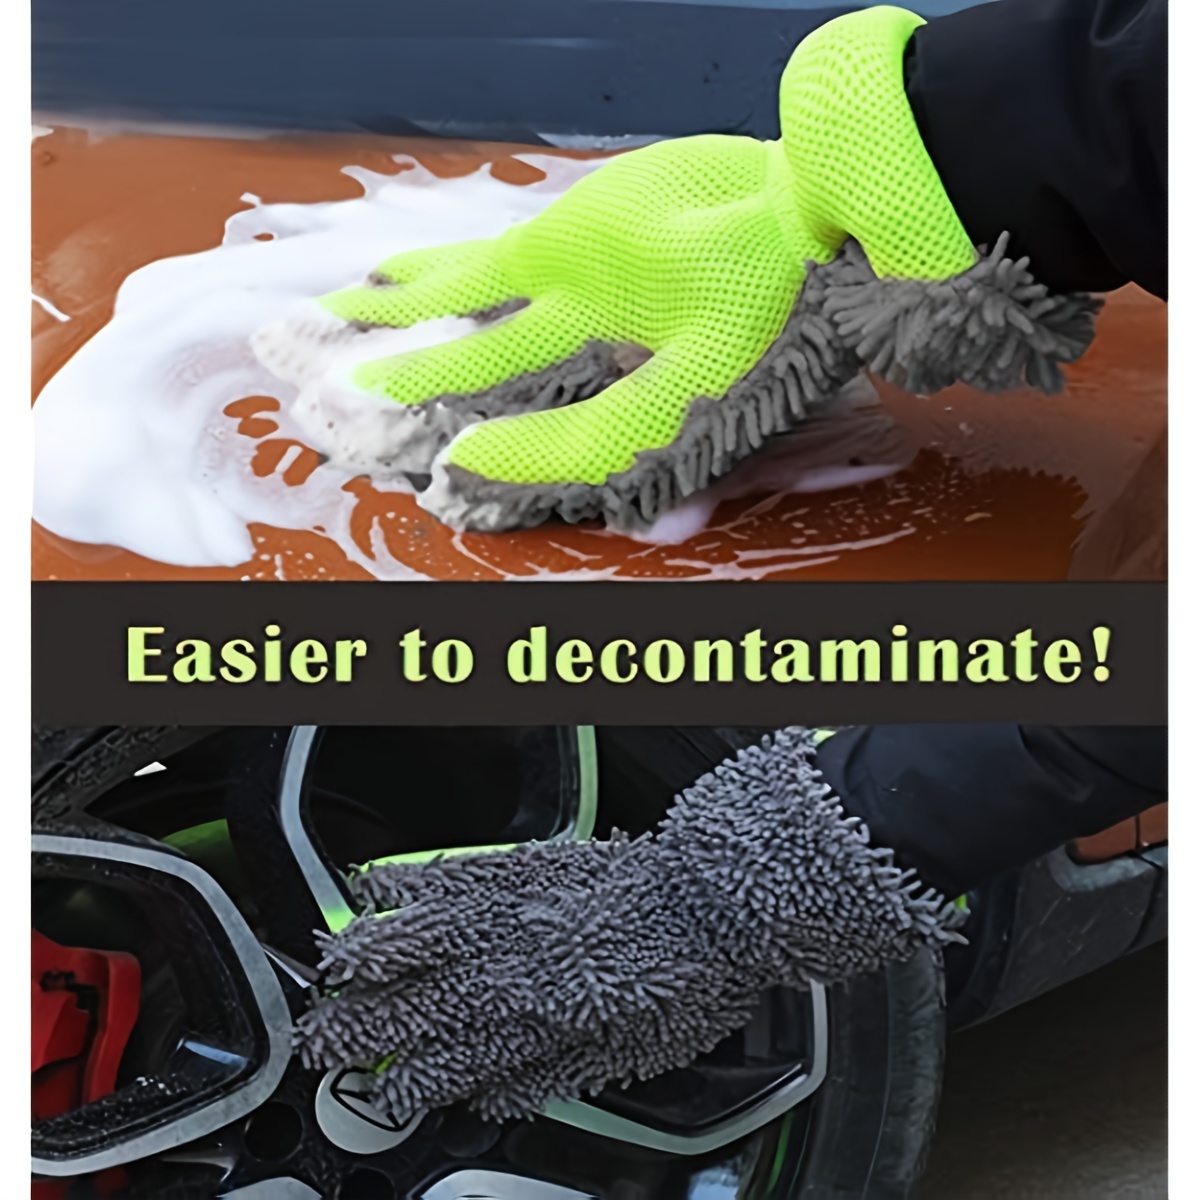 Car Care Car Wash Gloves, Car Washing Sponges, Mitt Chenille Car